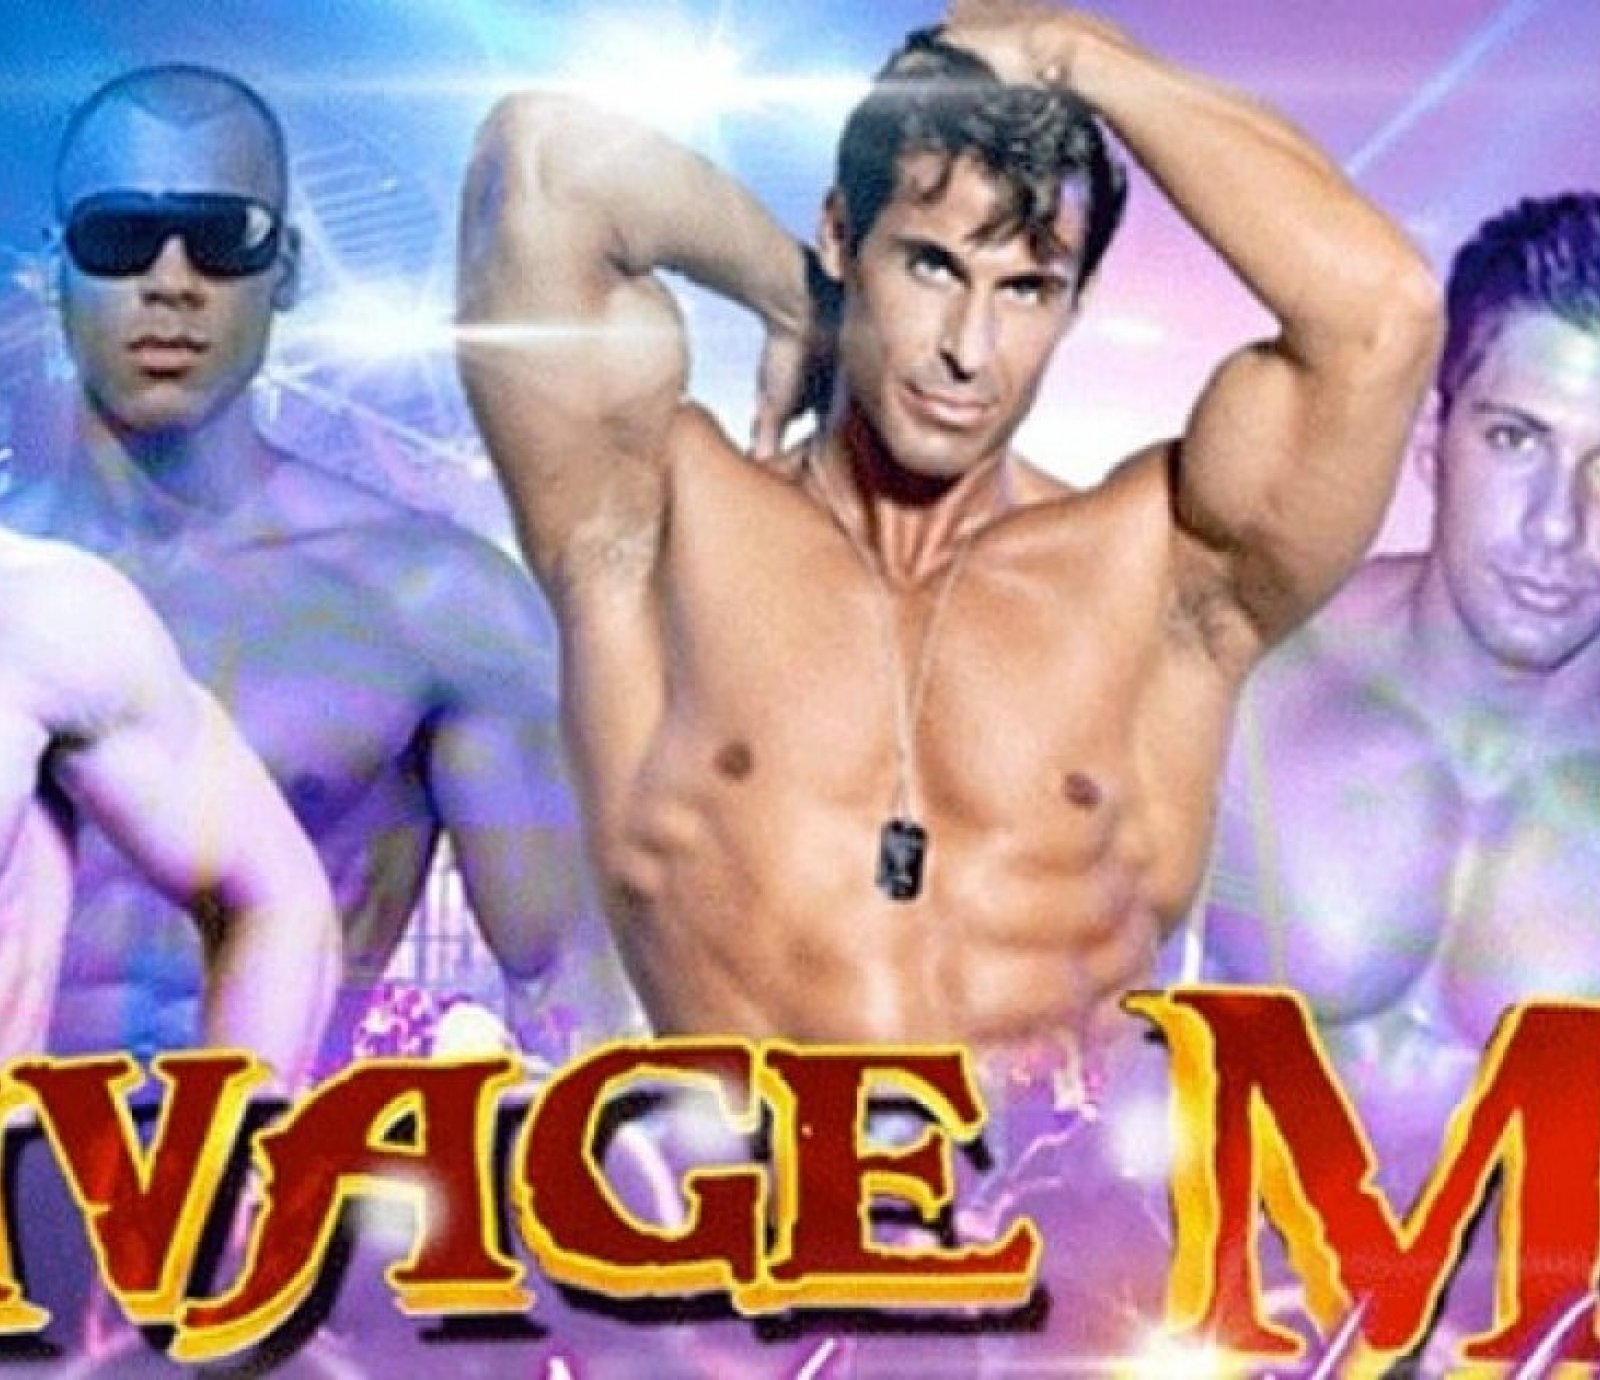 Savage Men Male Revue - Denver